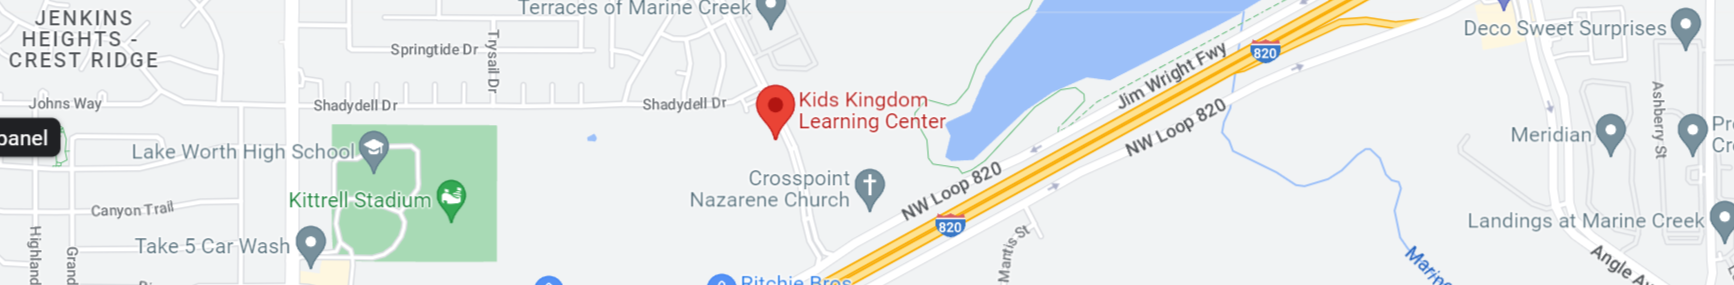 FireShot Capture 011 - Kids Kingdom Learning Center - Google Maps - www.google.com